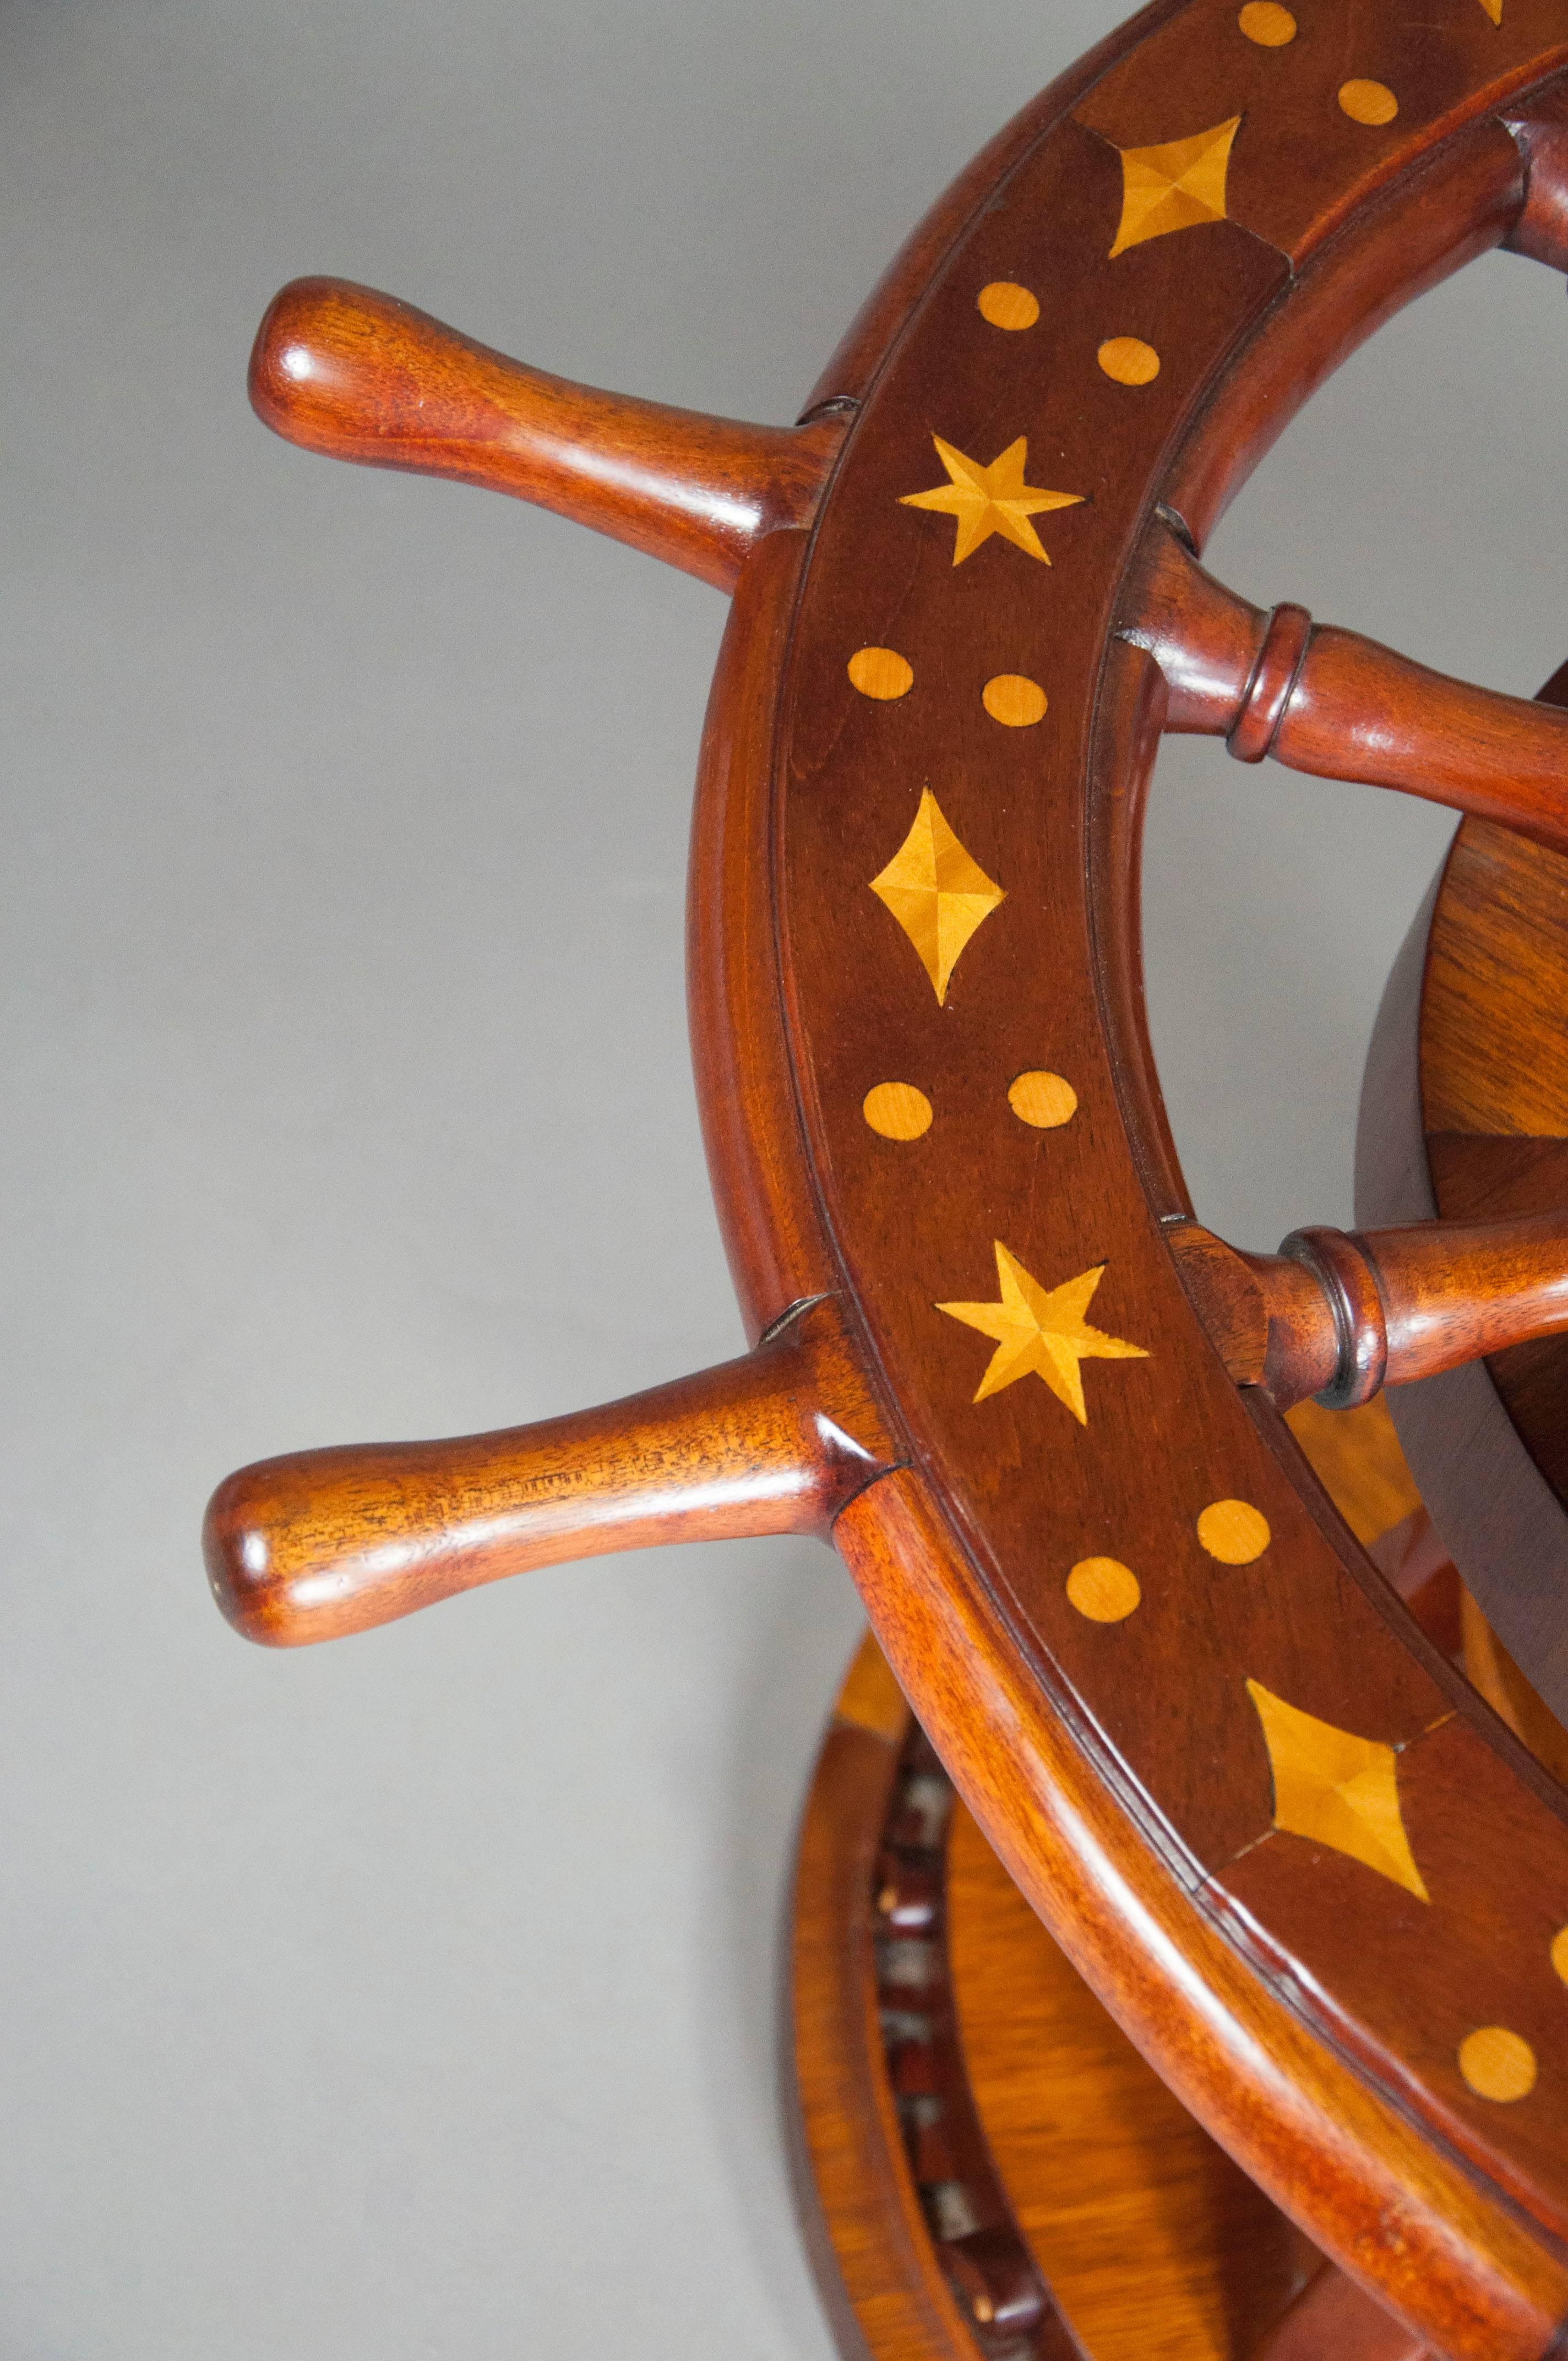 ships wheel table